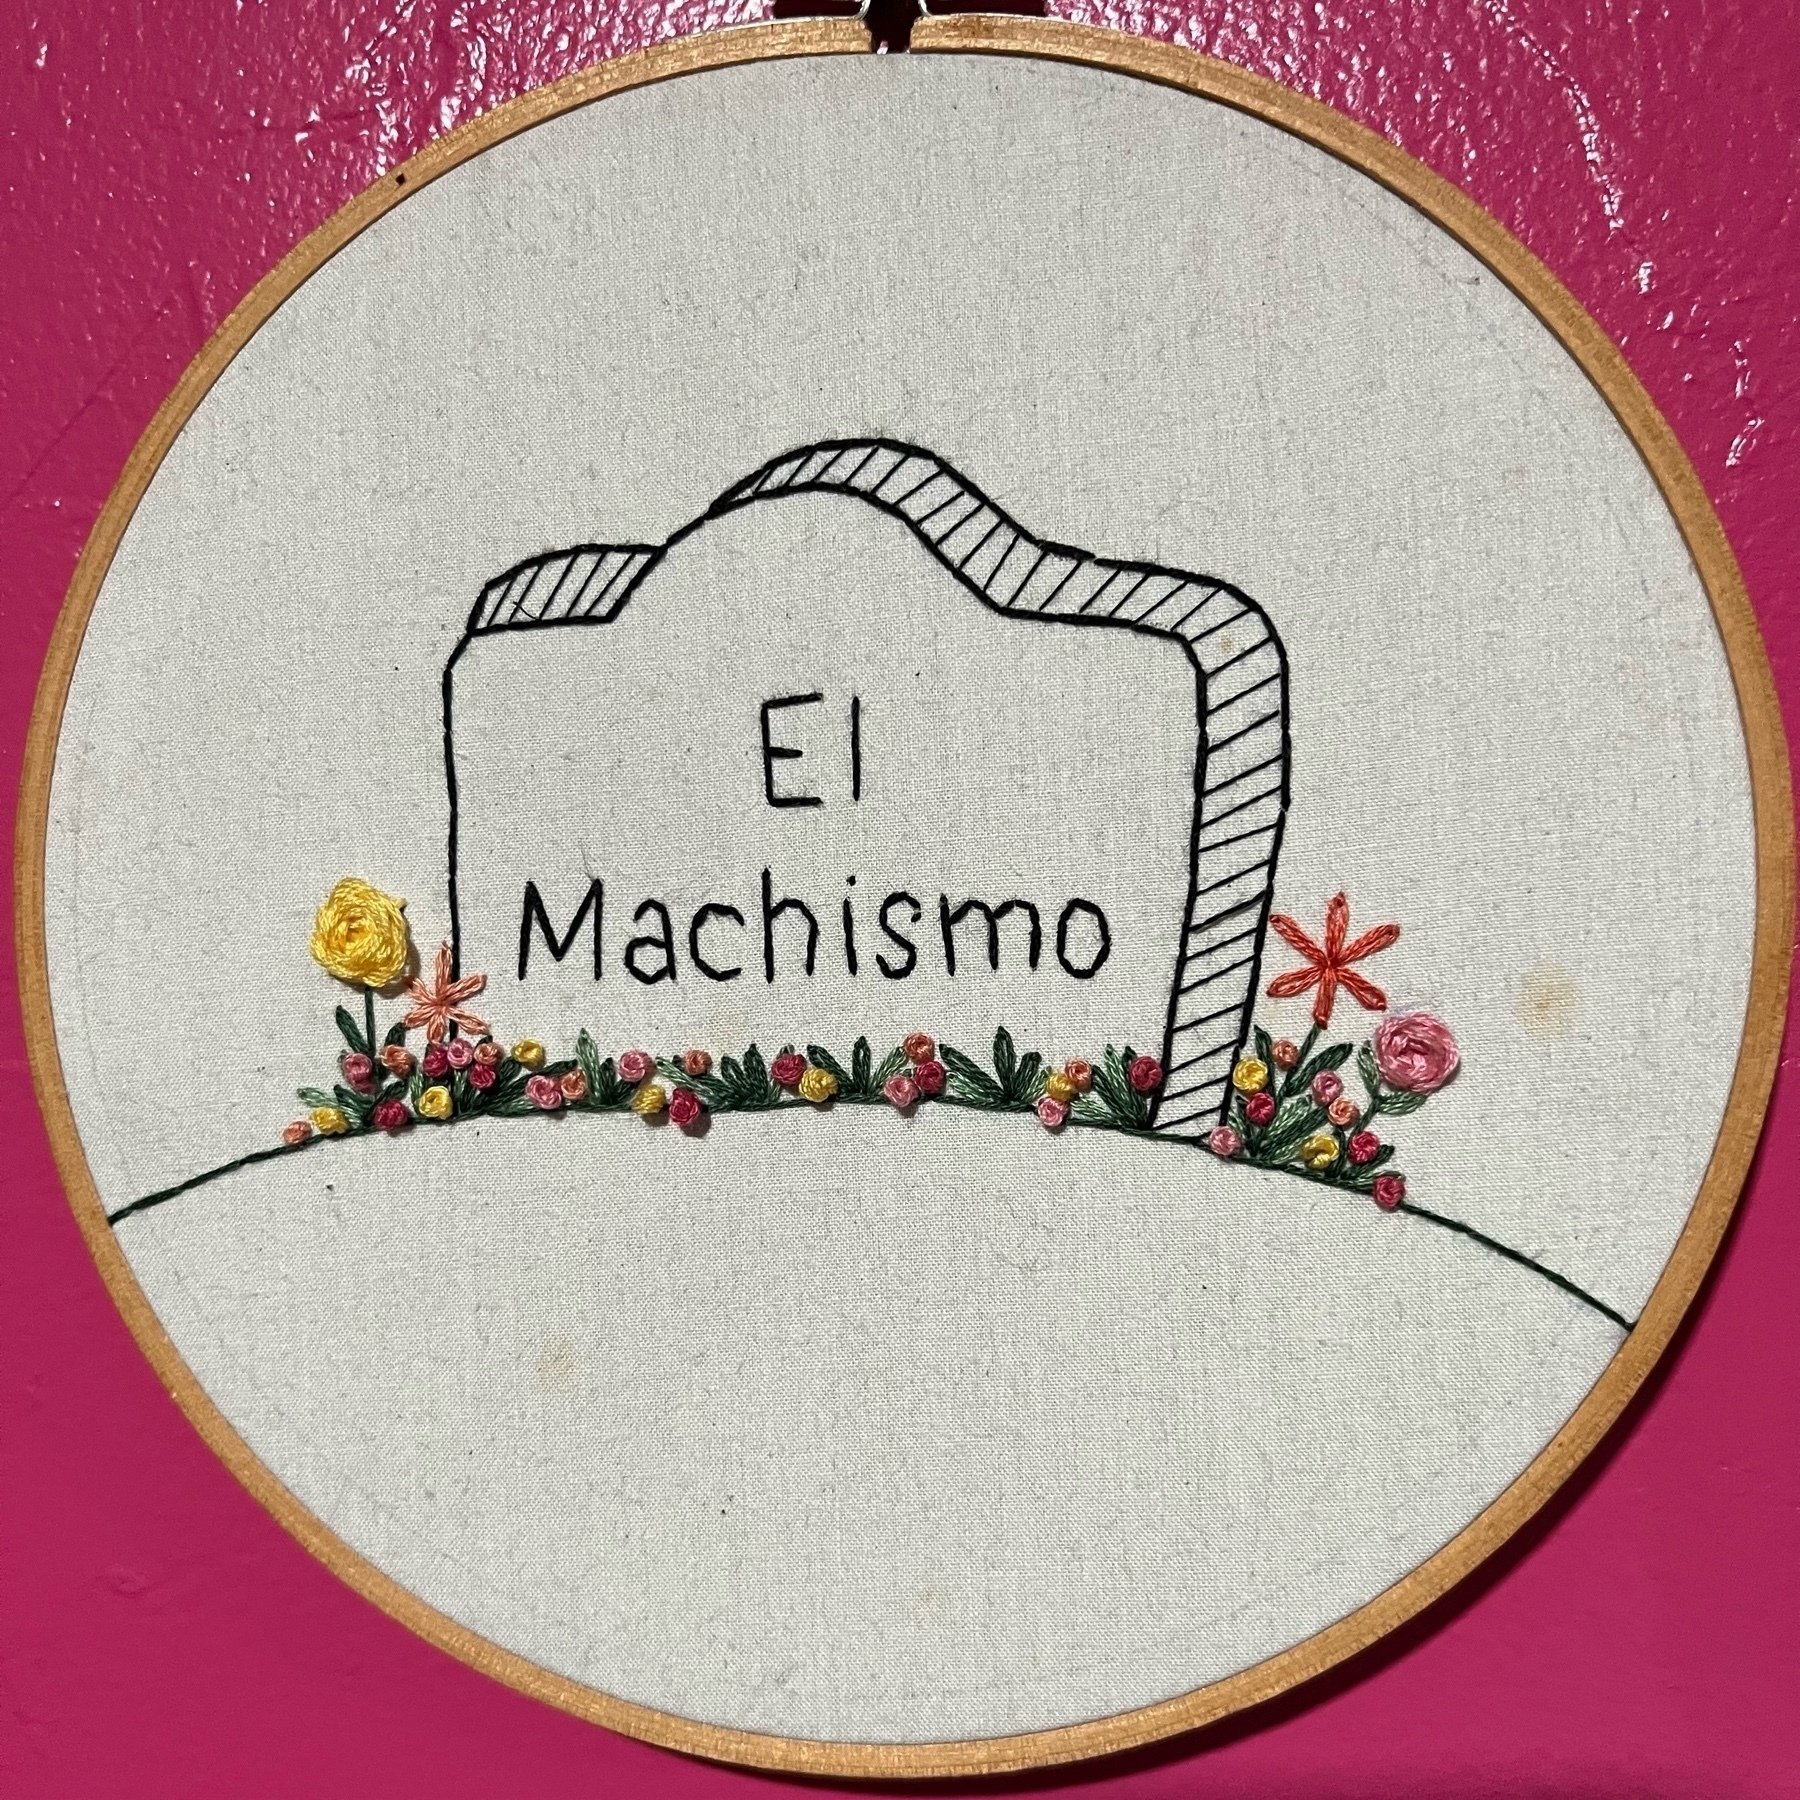 Machismo stitched onto a gravestone.